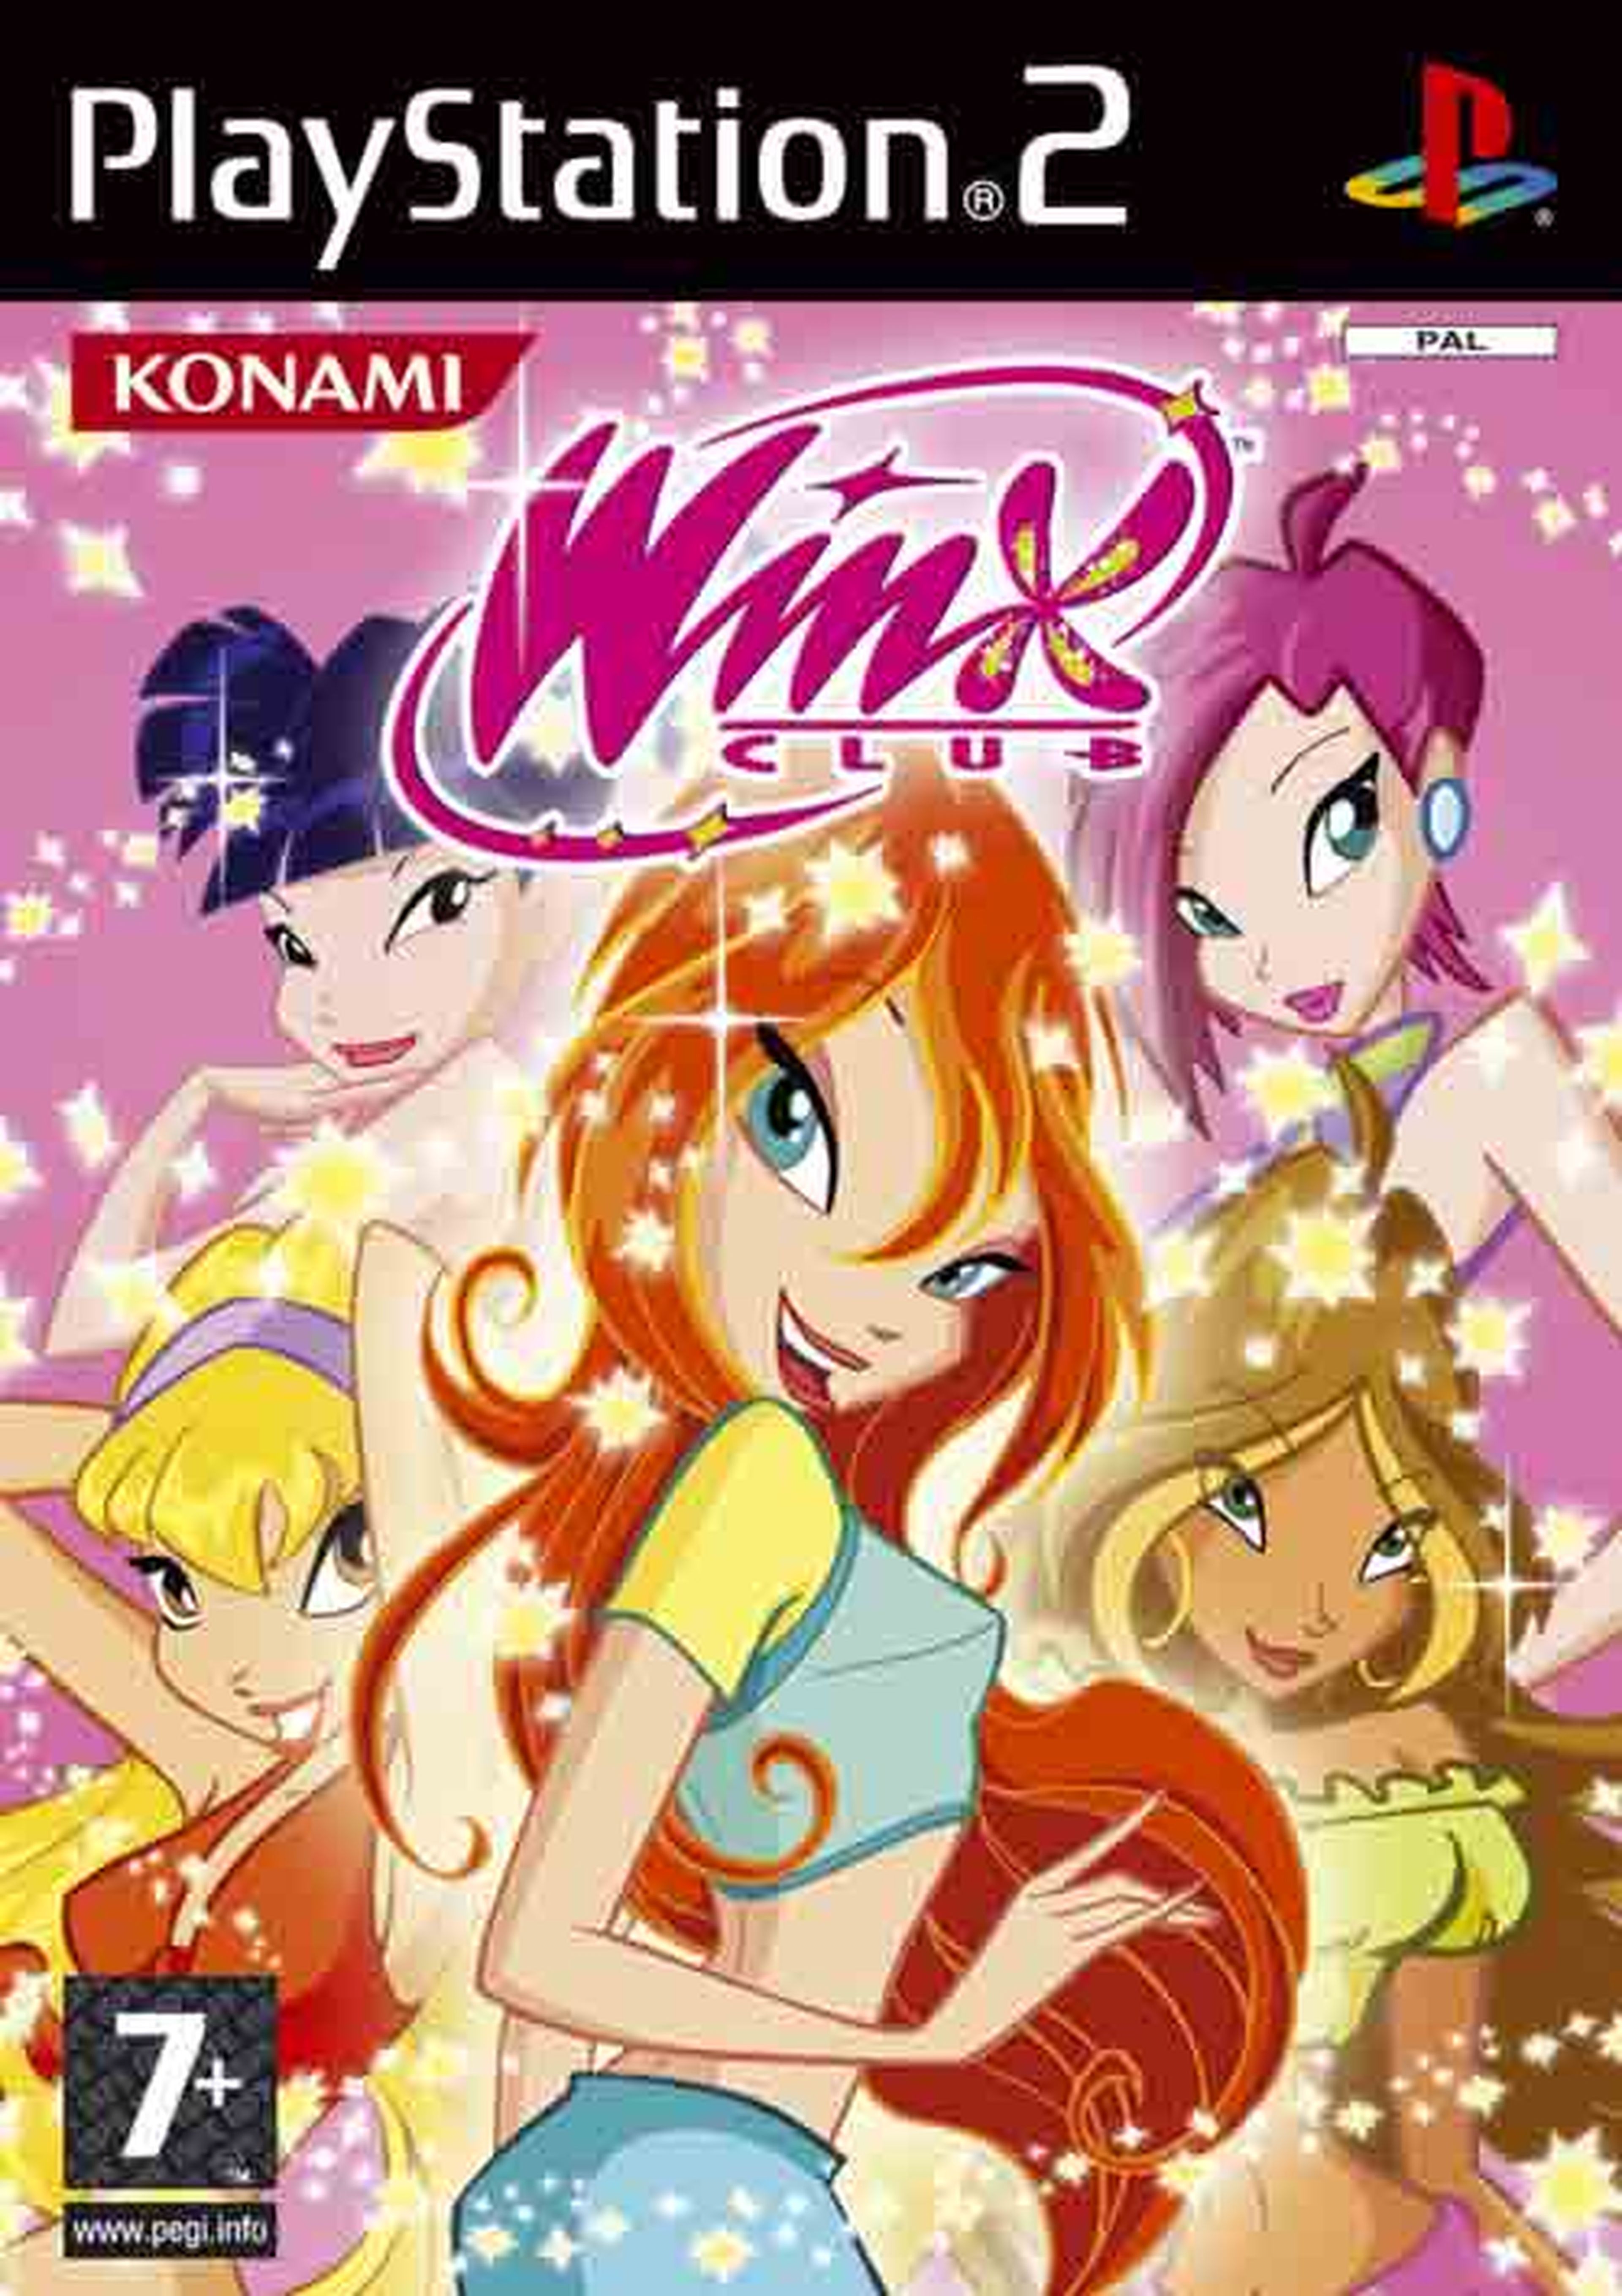 Winx game